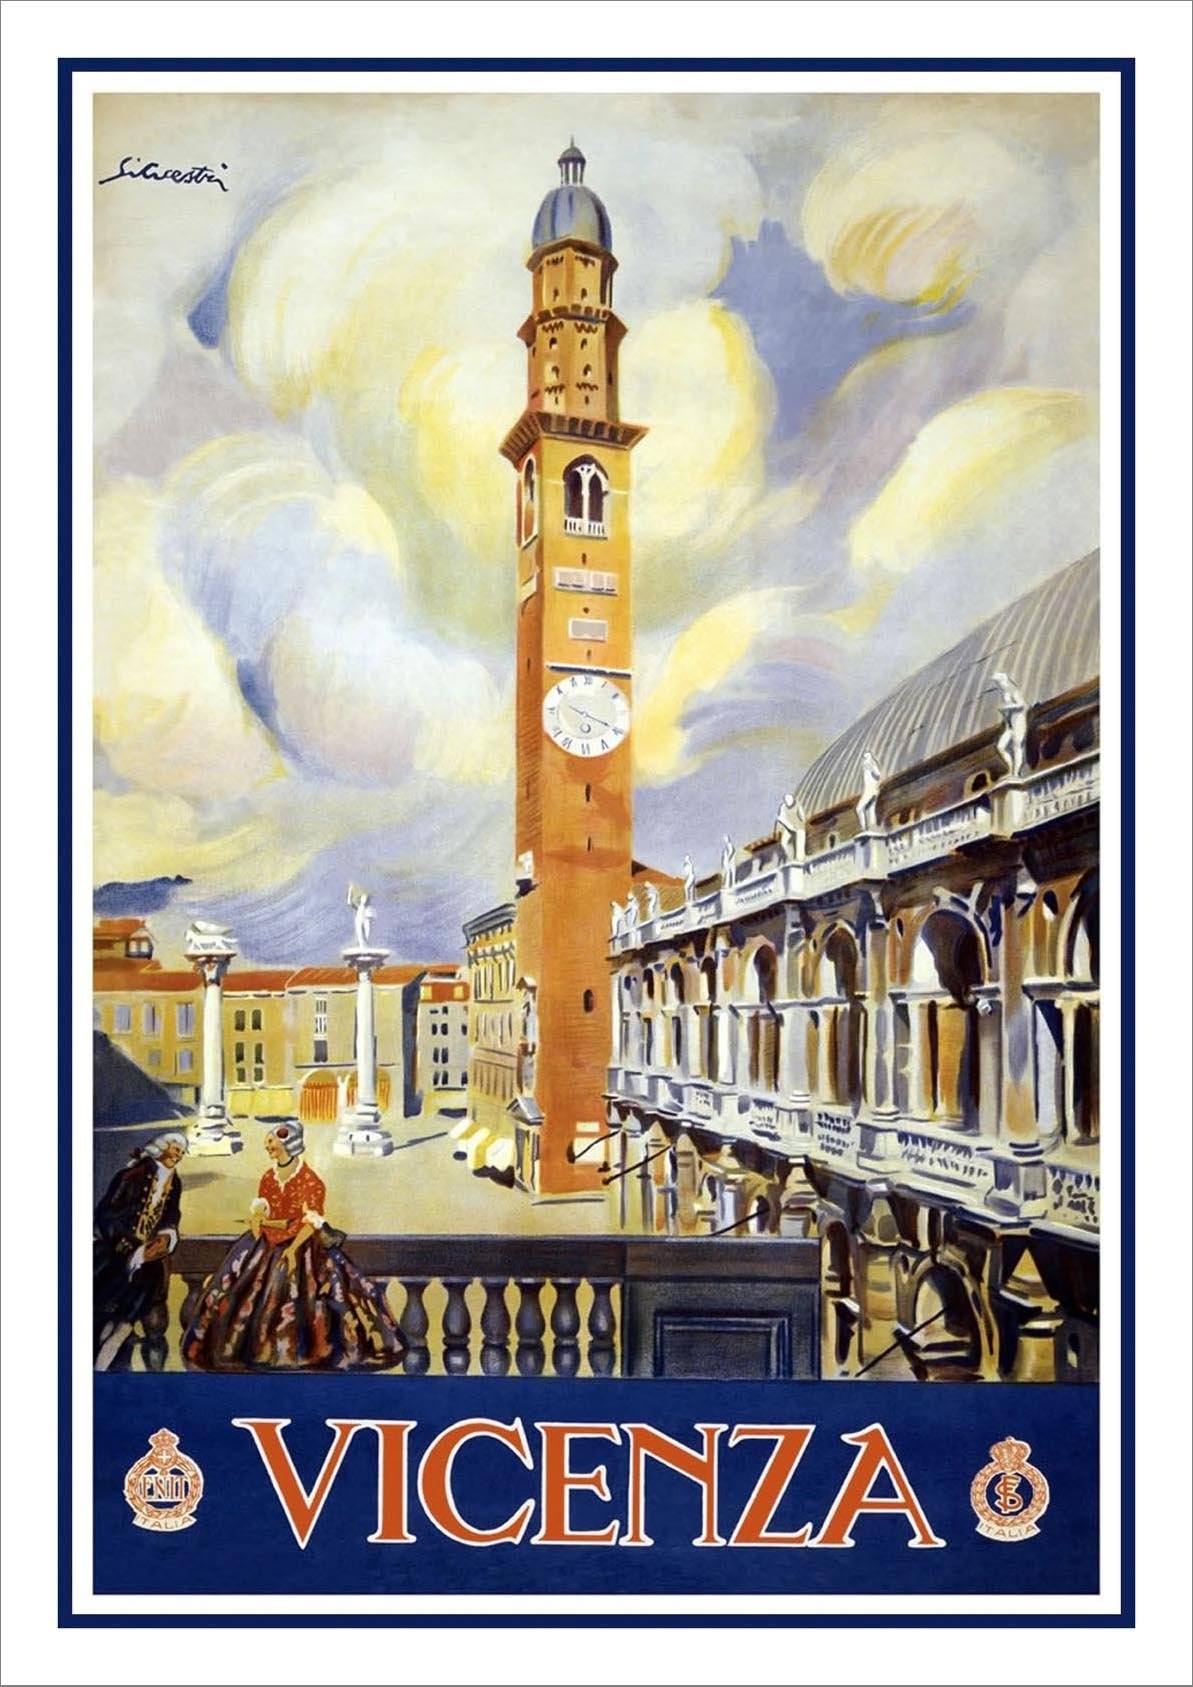 VICENZA TRAVEL POSTER: Vintage Italy Tourism Print - Pimlico Prints